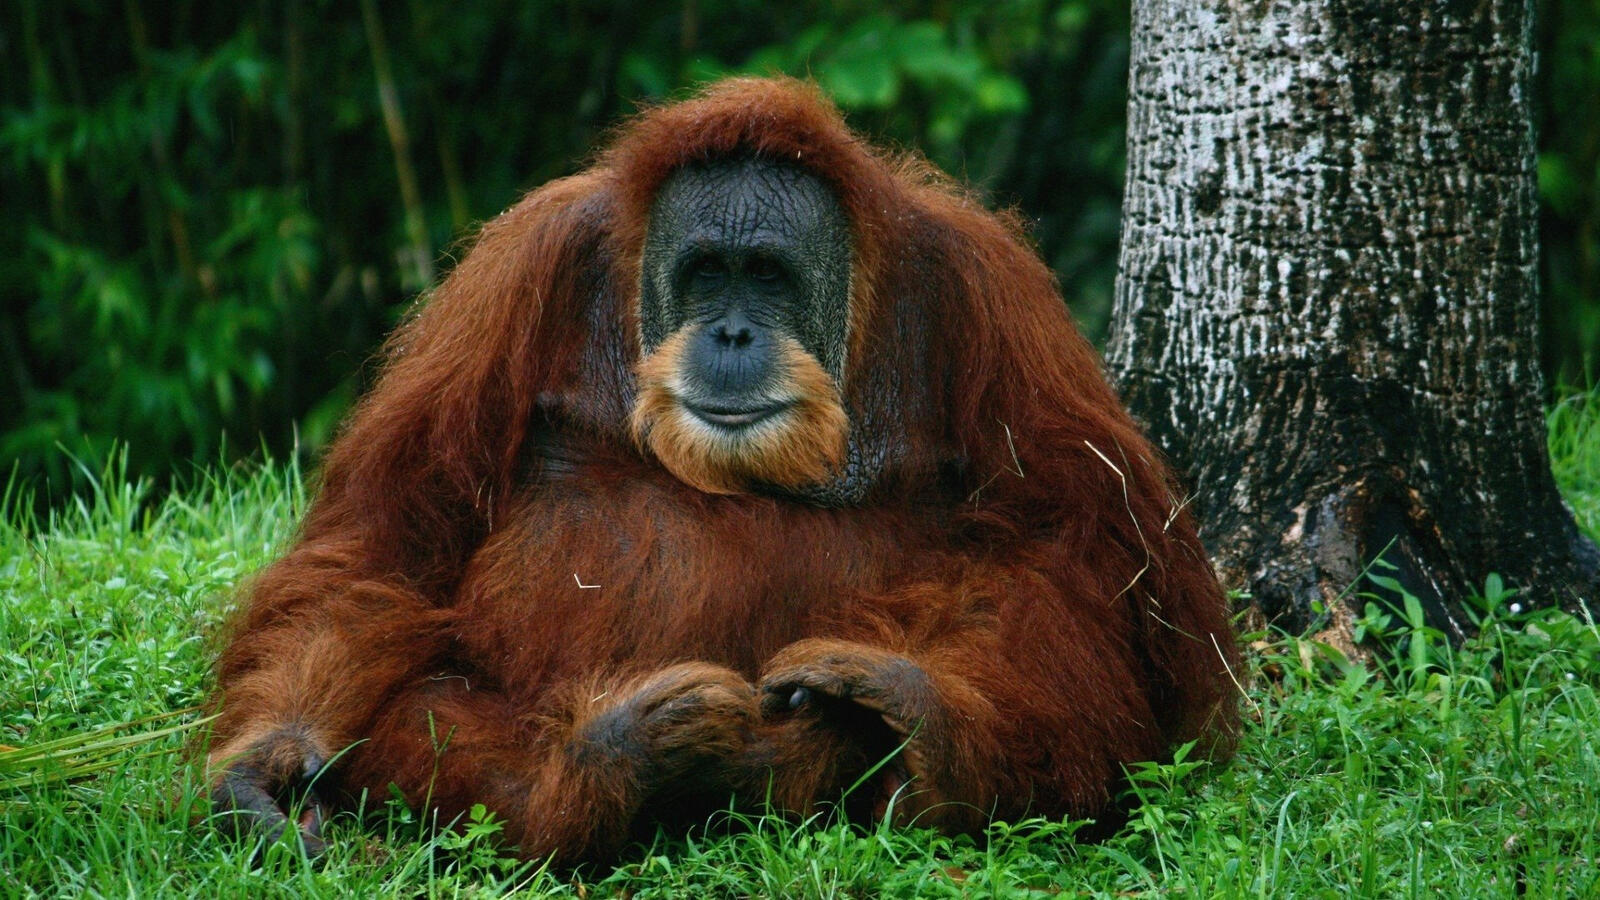 Free photo An orangutan sits on green grass